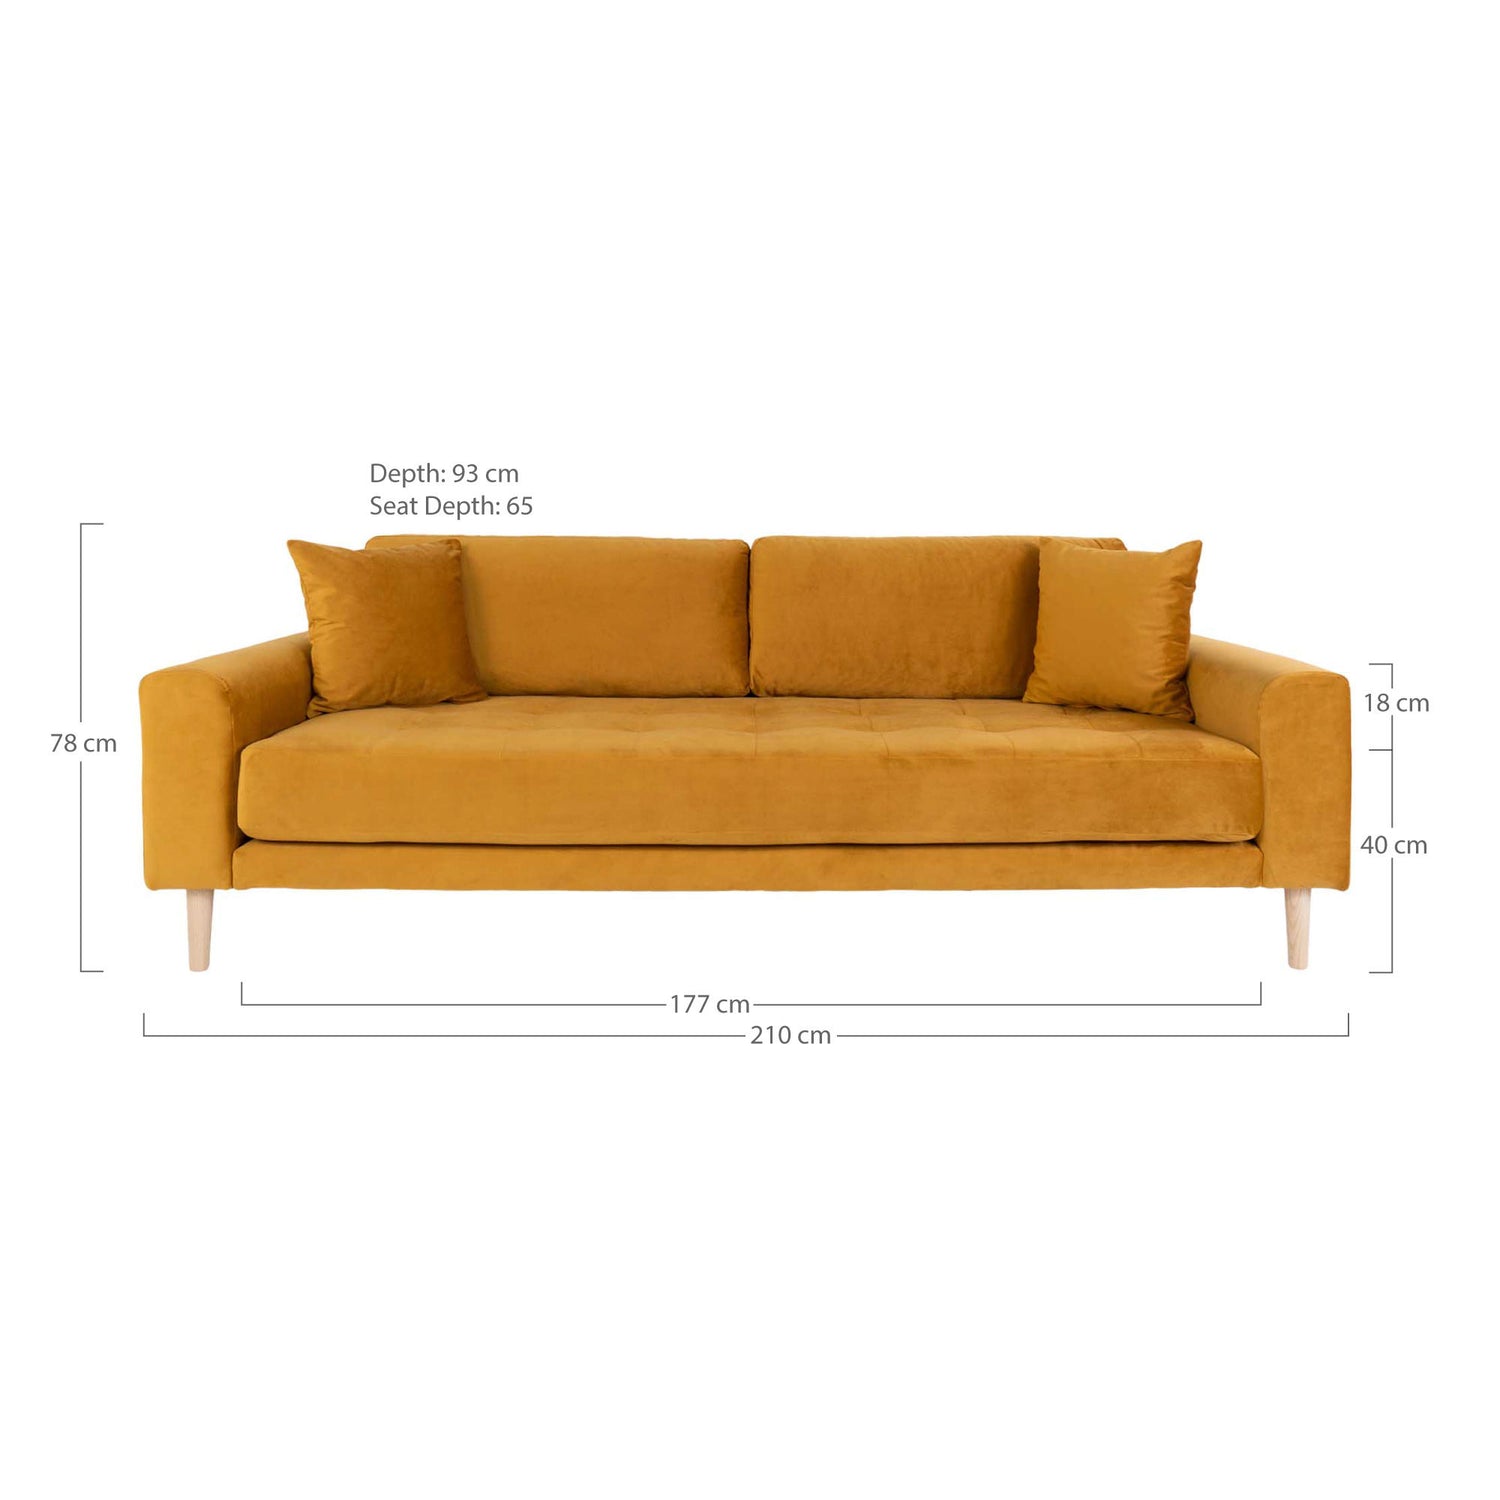 House Nordic - Lido 3 person sofa